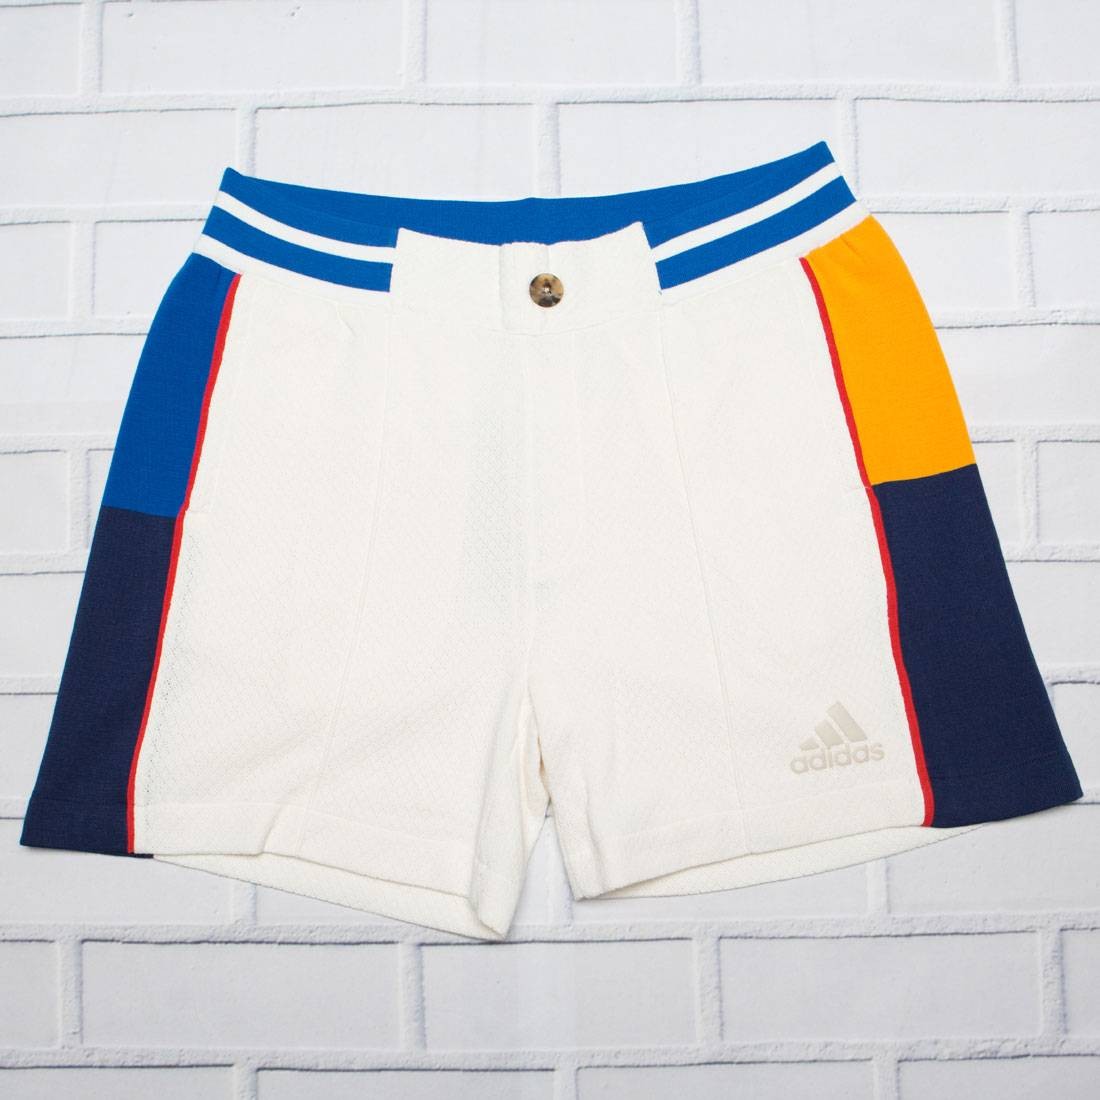 Adidas x Pharrell Williams Men NY Colorblock Shorts LTD white chalk white  blue